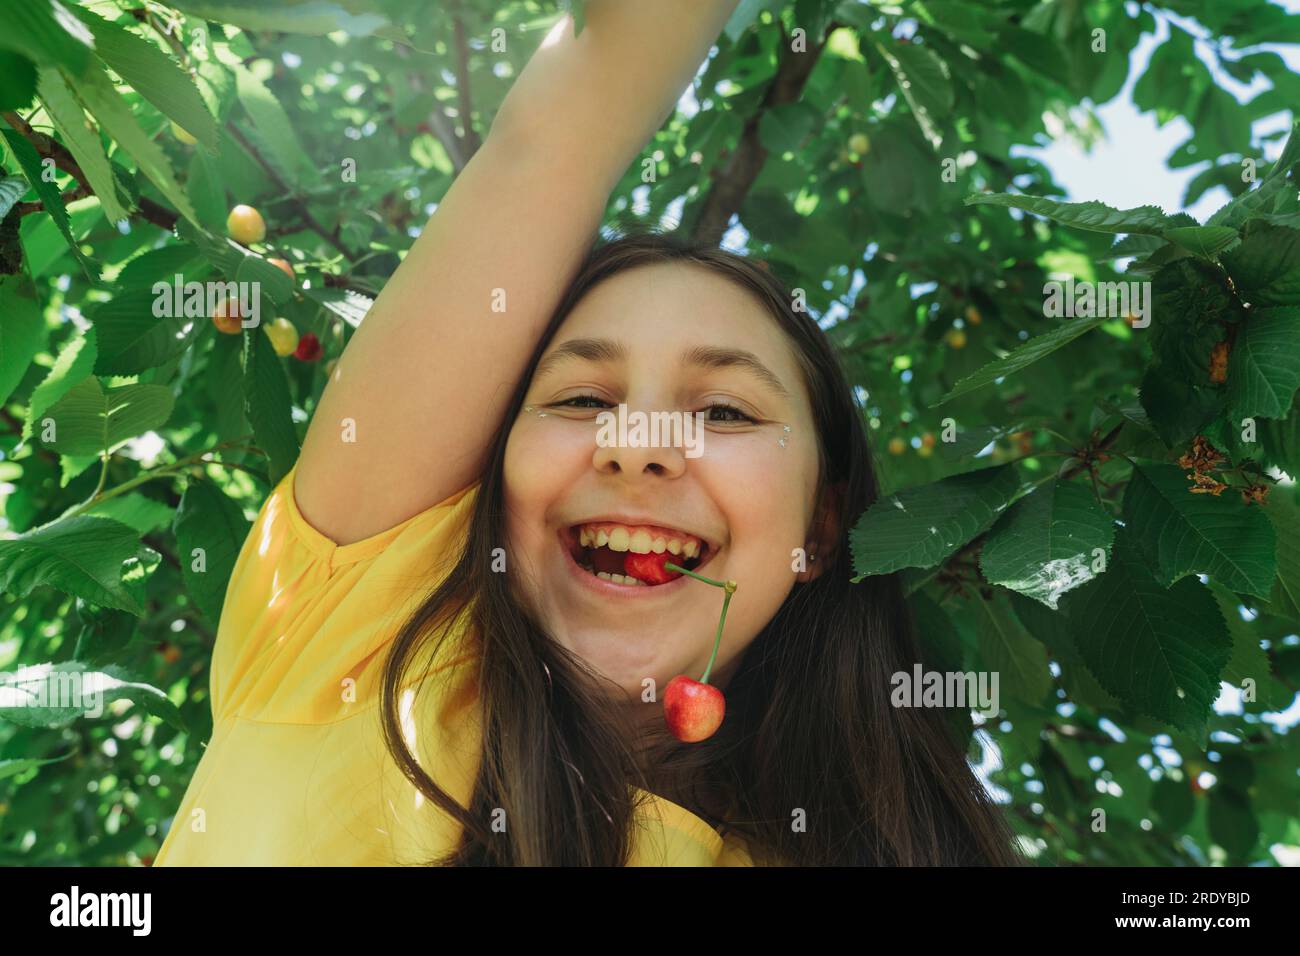 Smiling girl biting cherry in garden Stock Photo